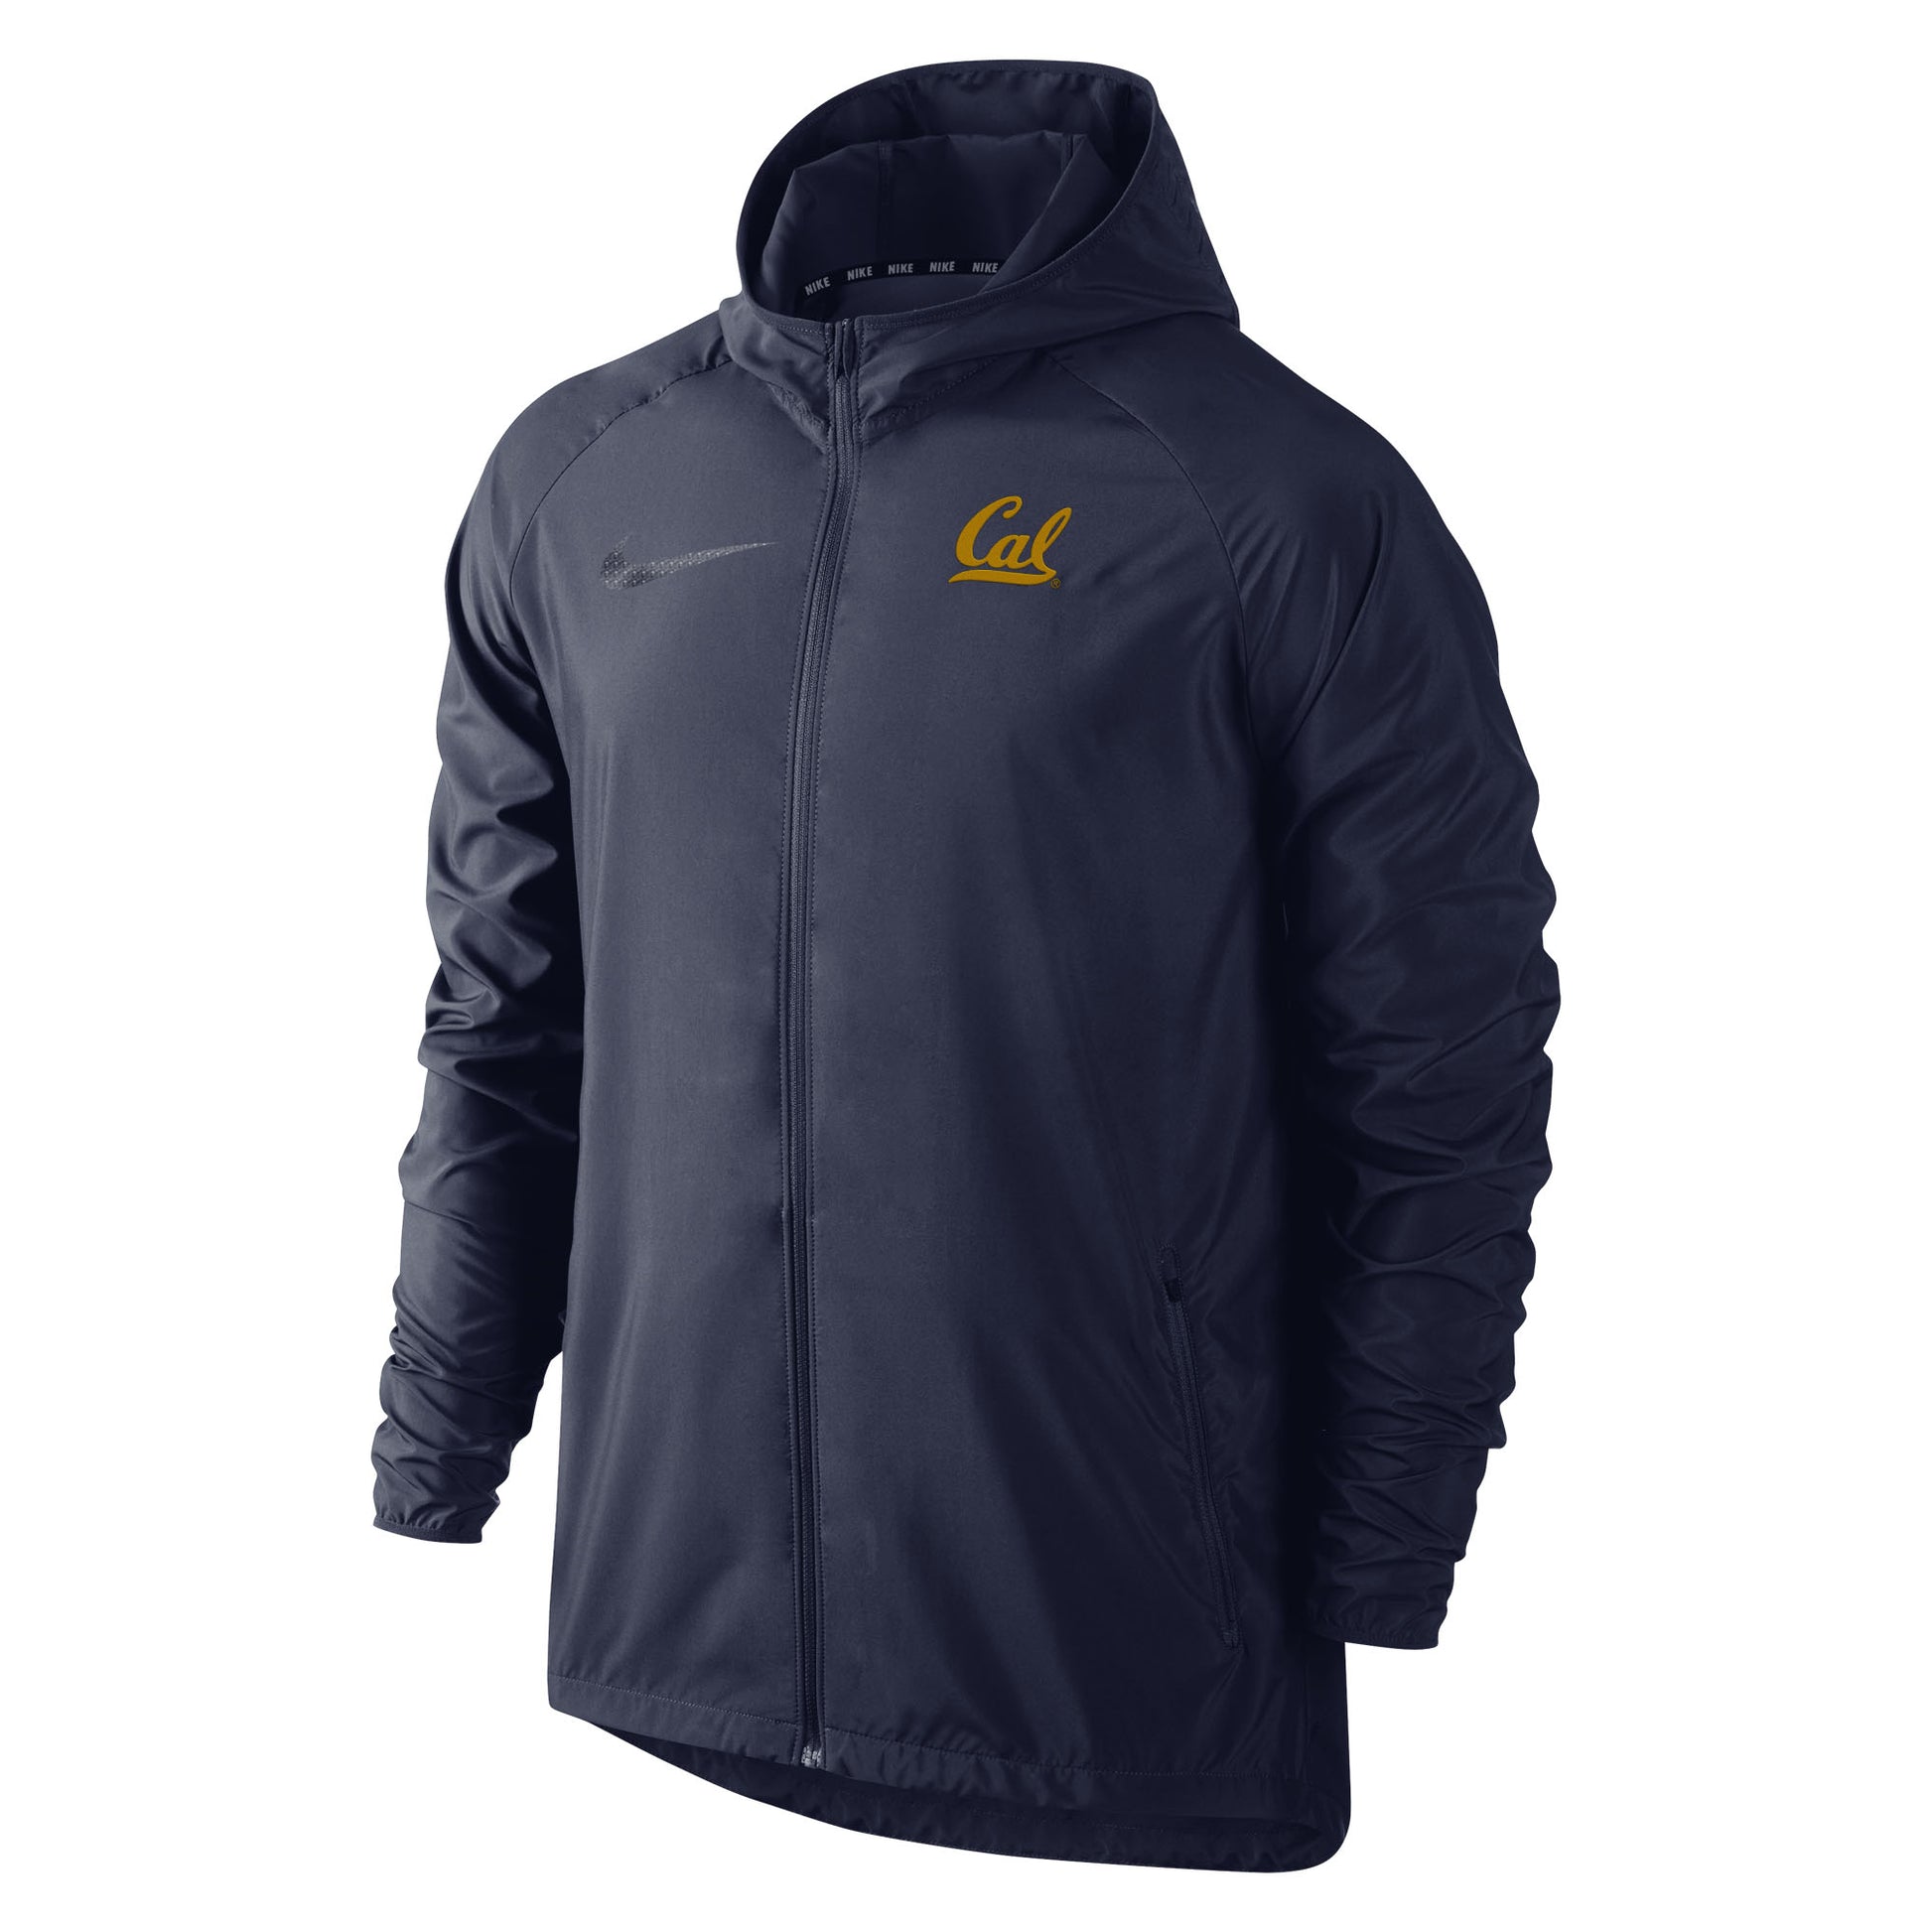 U.C. Berkeley Cal embroidered Nike essential jacket-Navy-Shop College Wear